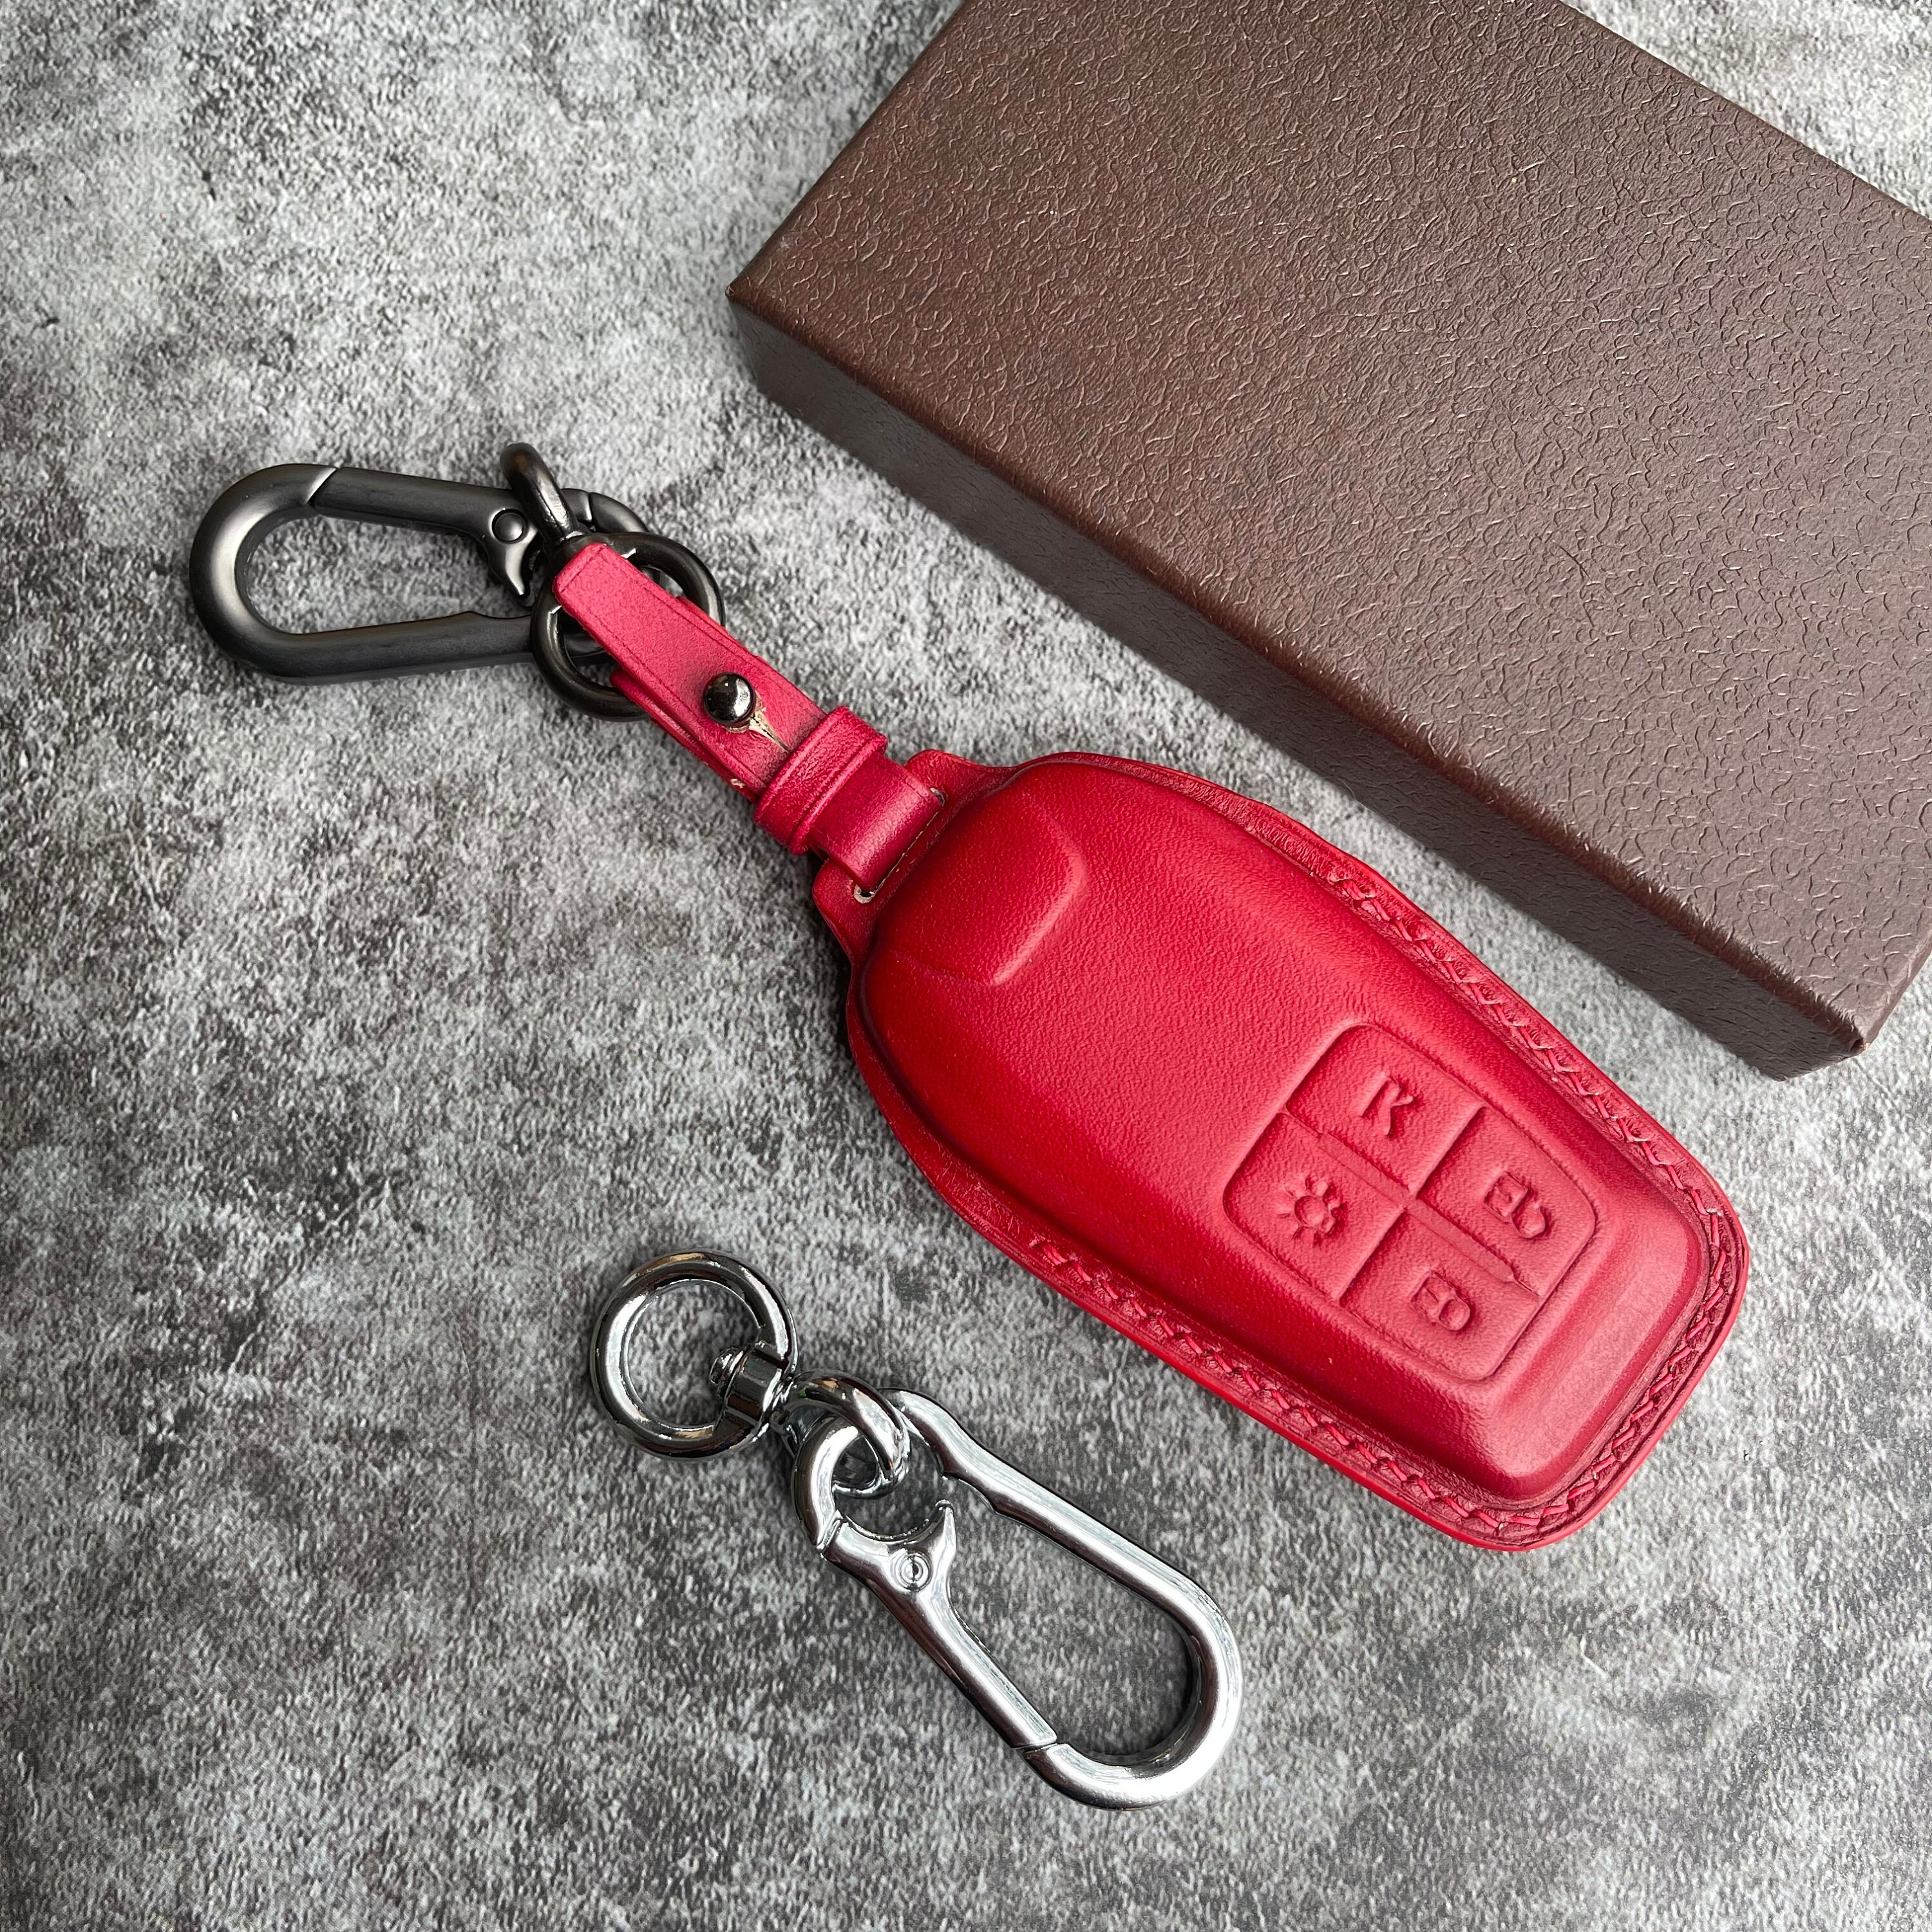 Pocher 1/8 Ferrari Testarossa Metal Key With Leather Keyfob Key Fob 